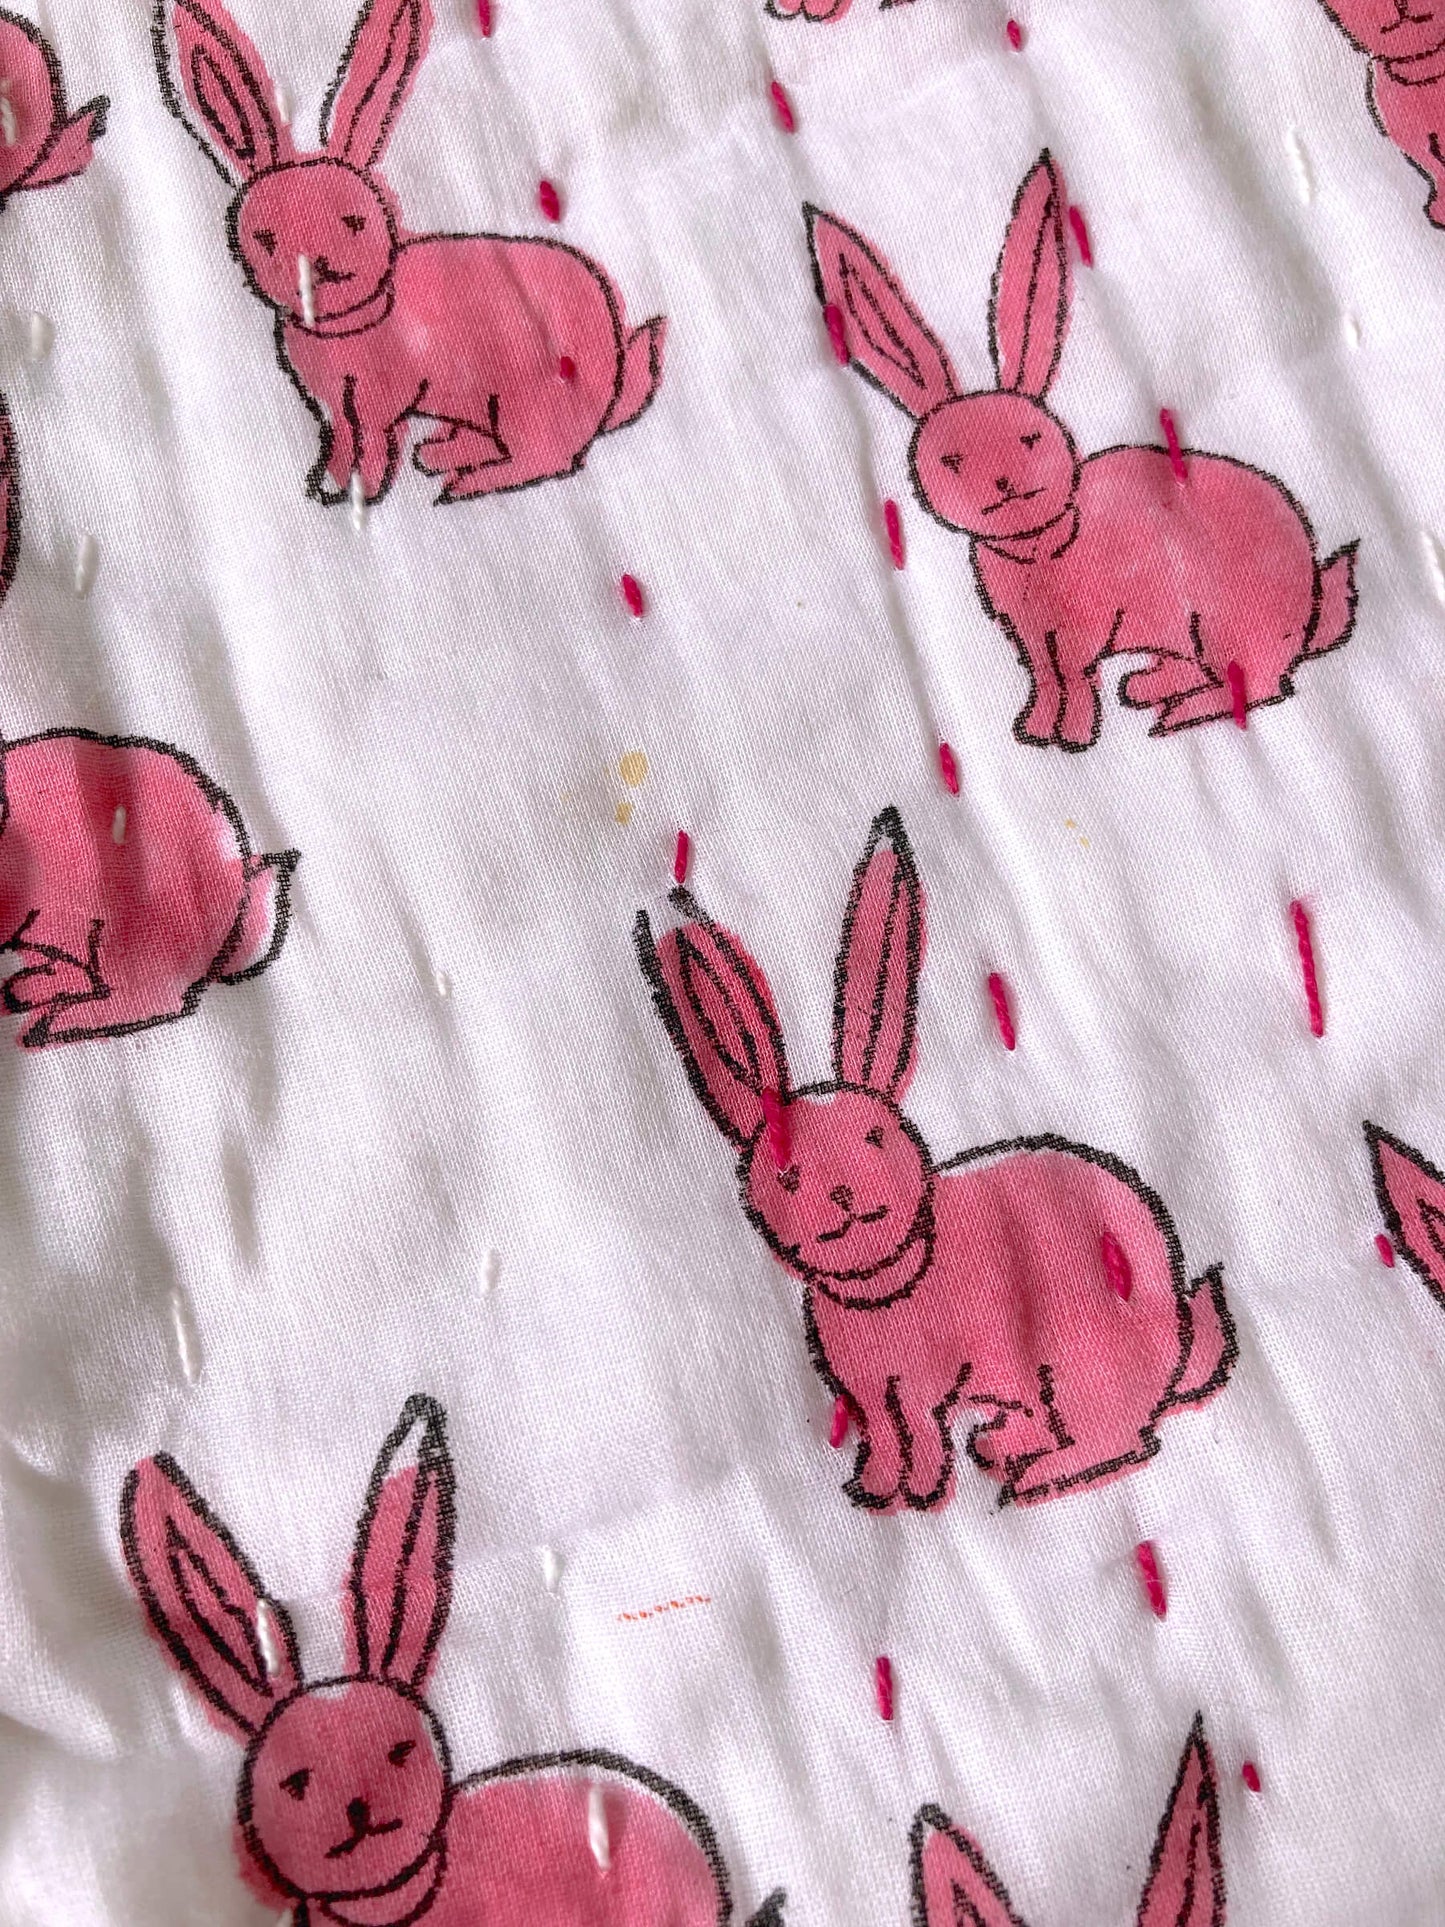 Hand Block Print Pink Bunny Hand Stitch Baby Quilt